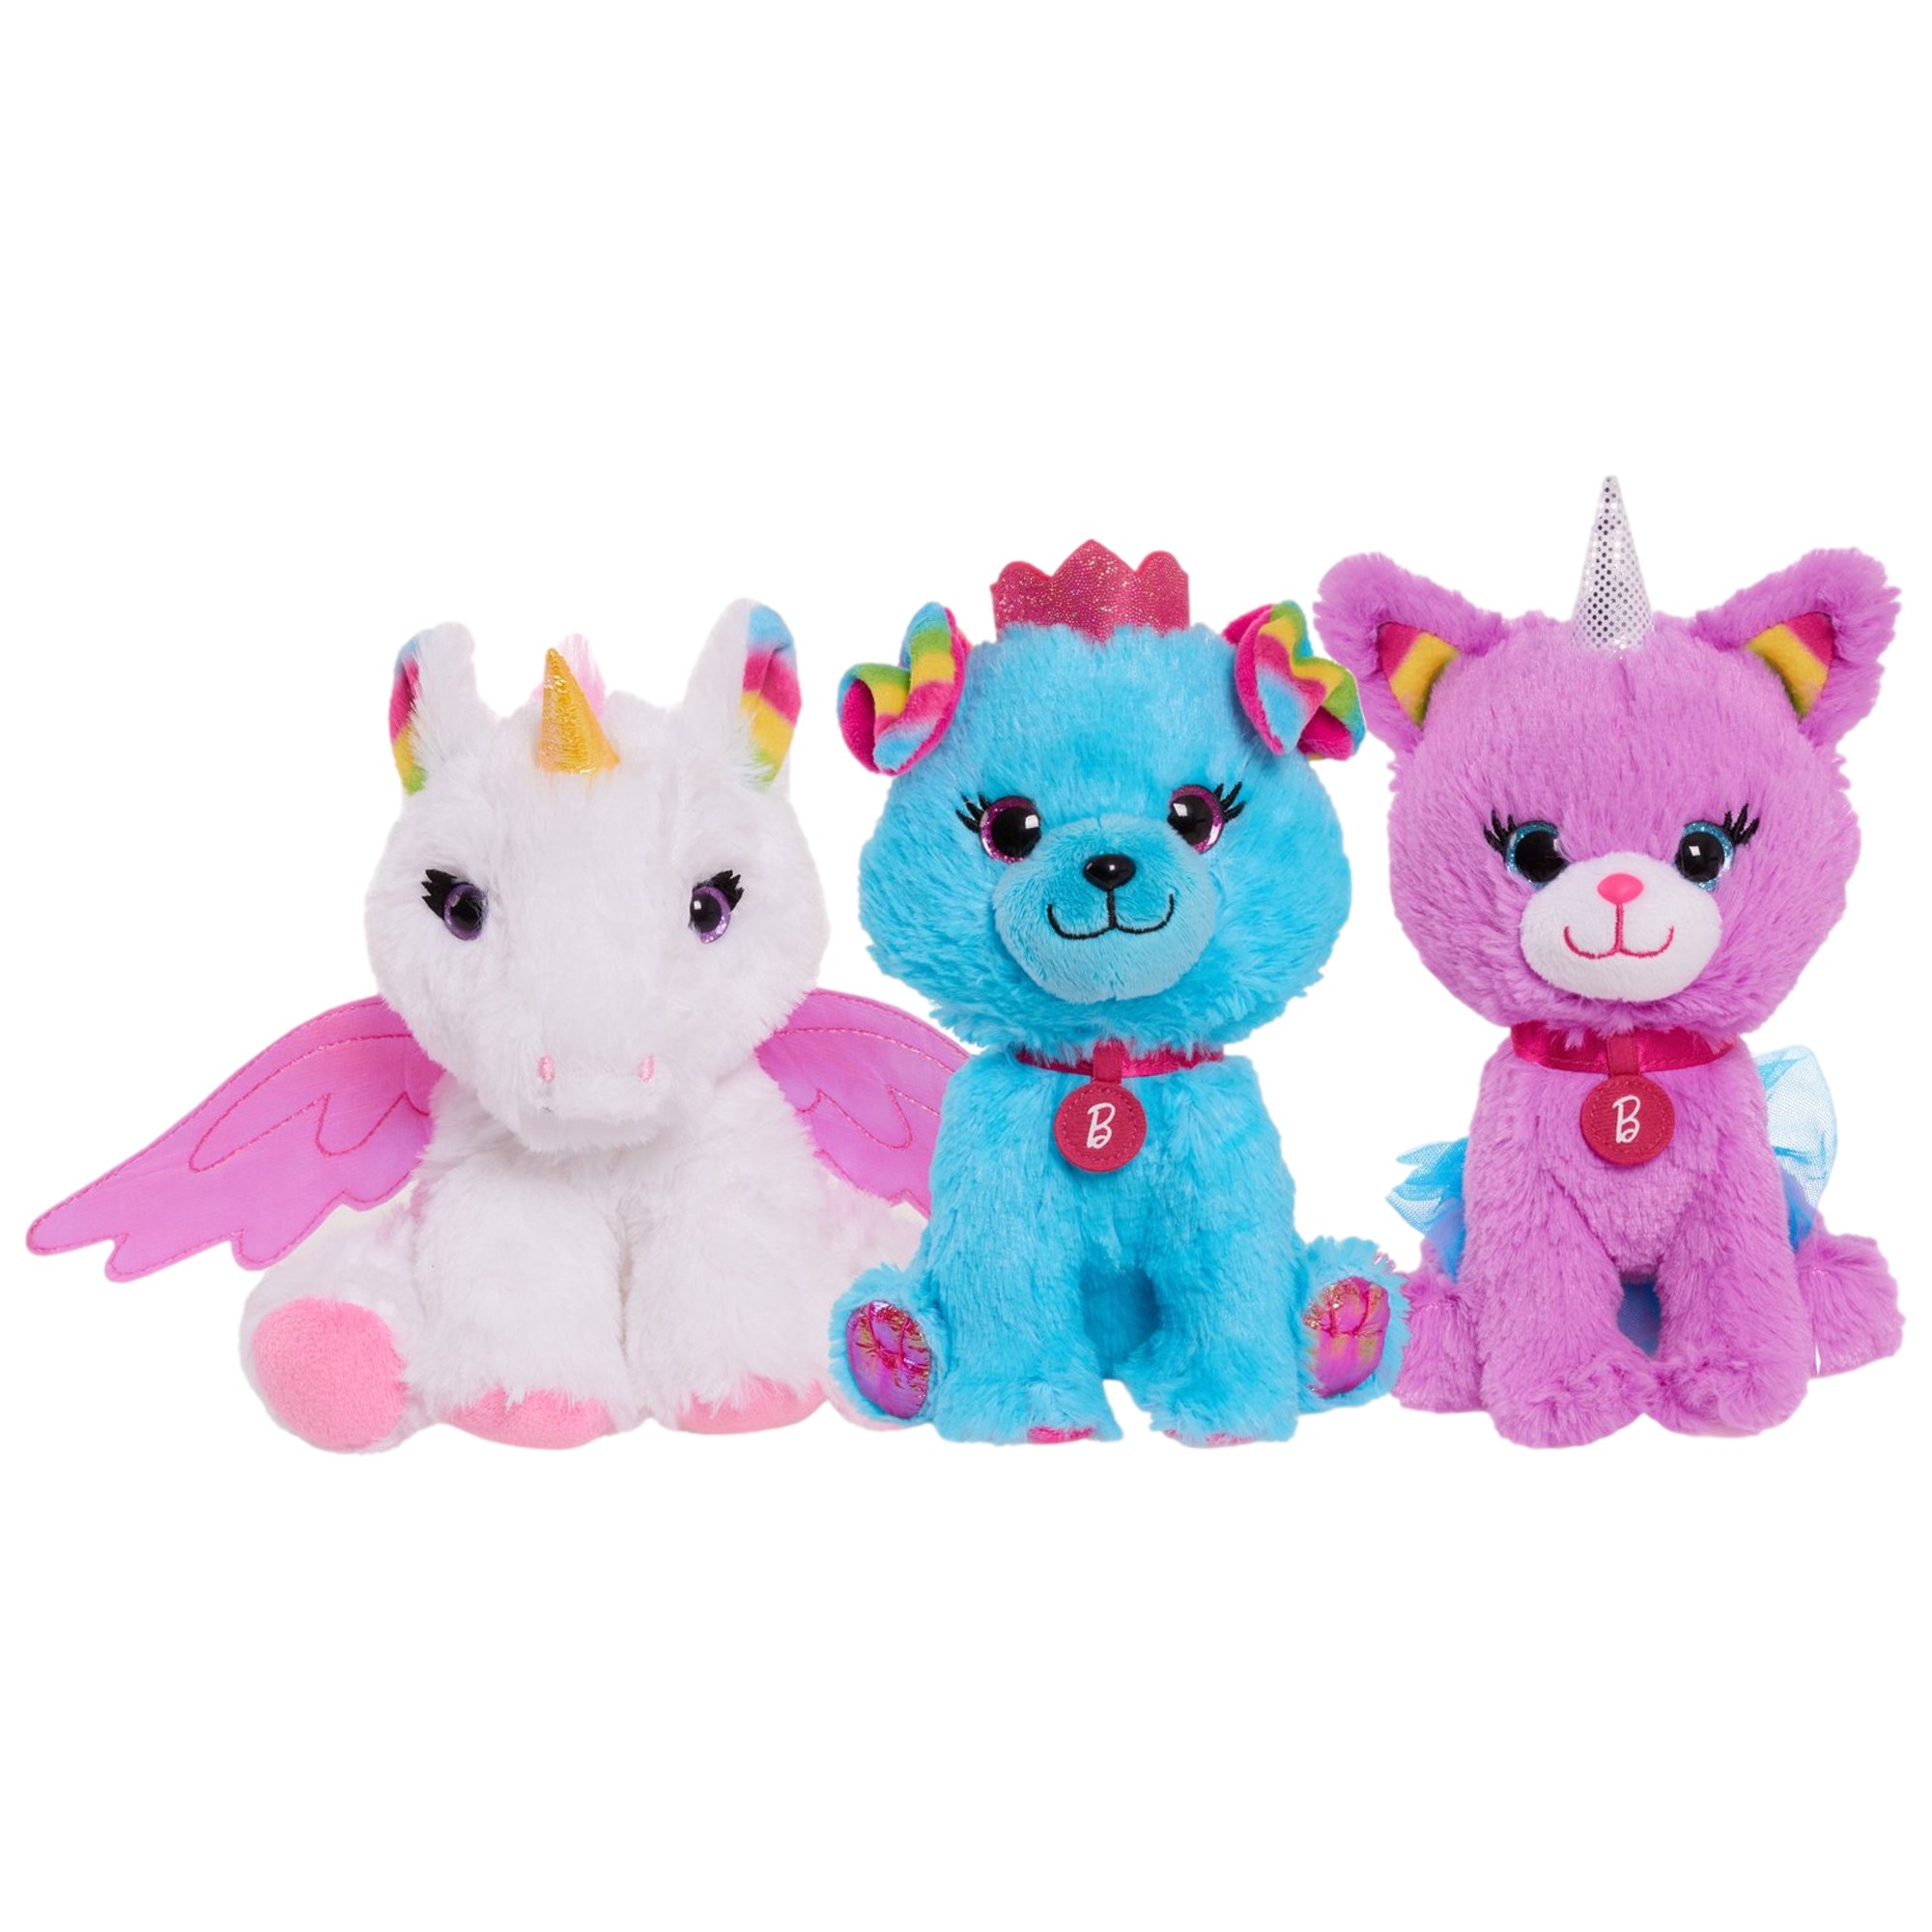 Barbie 3 Piece Plush Pet Set with Unicorn, Unicorn Kitty & Princess Puppy Animal